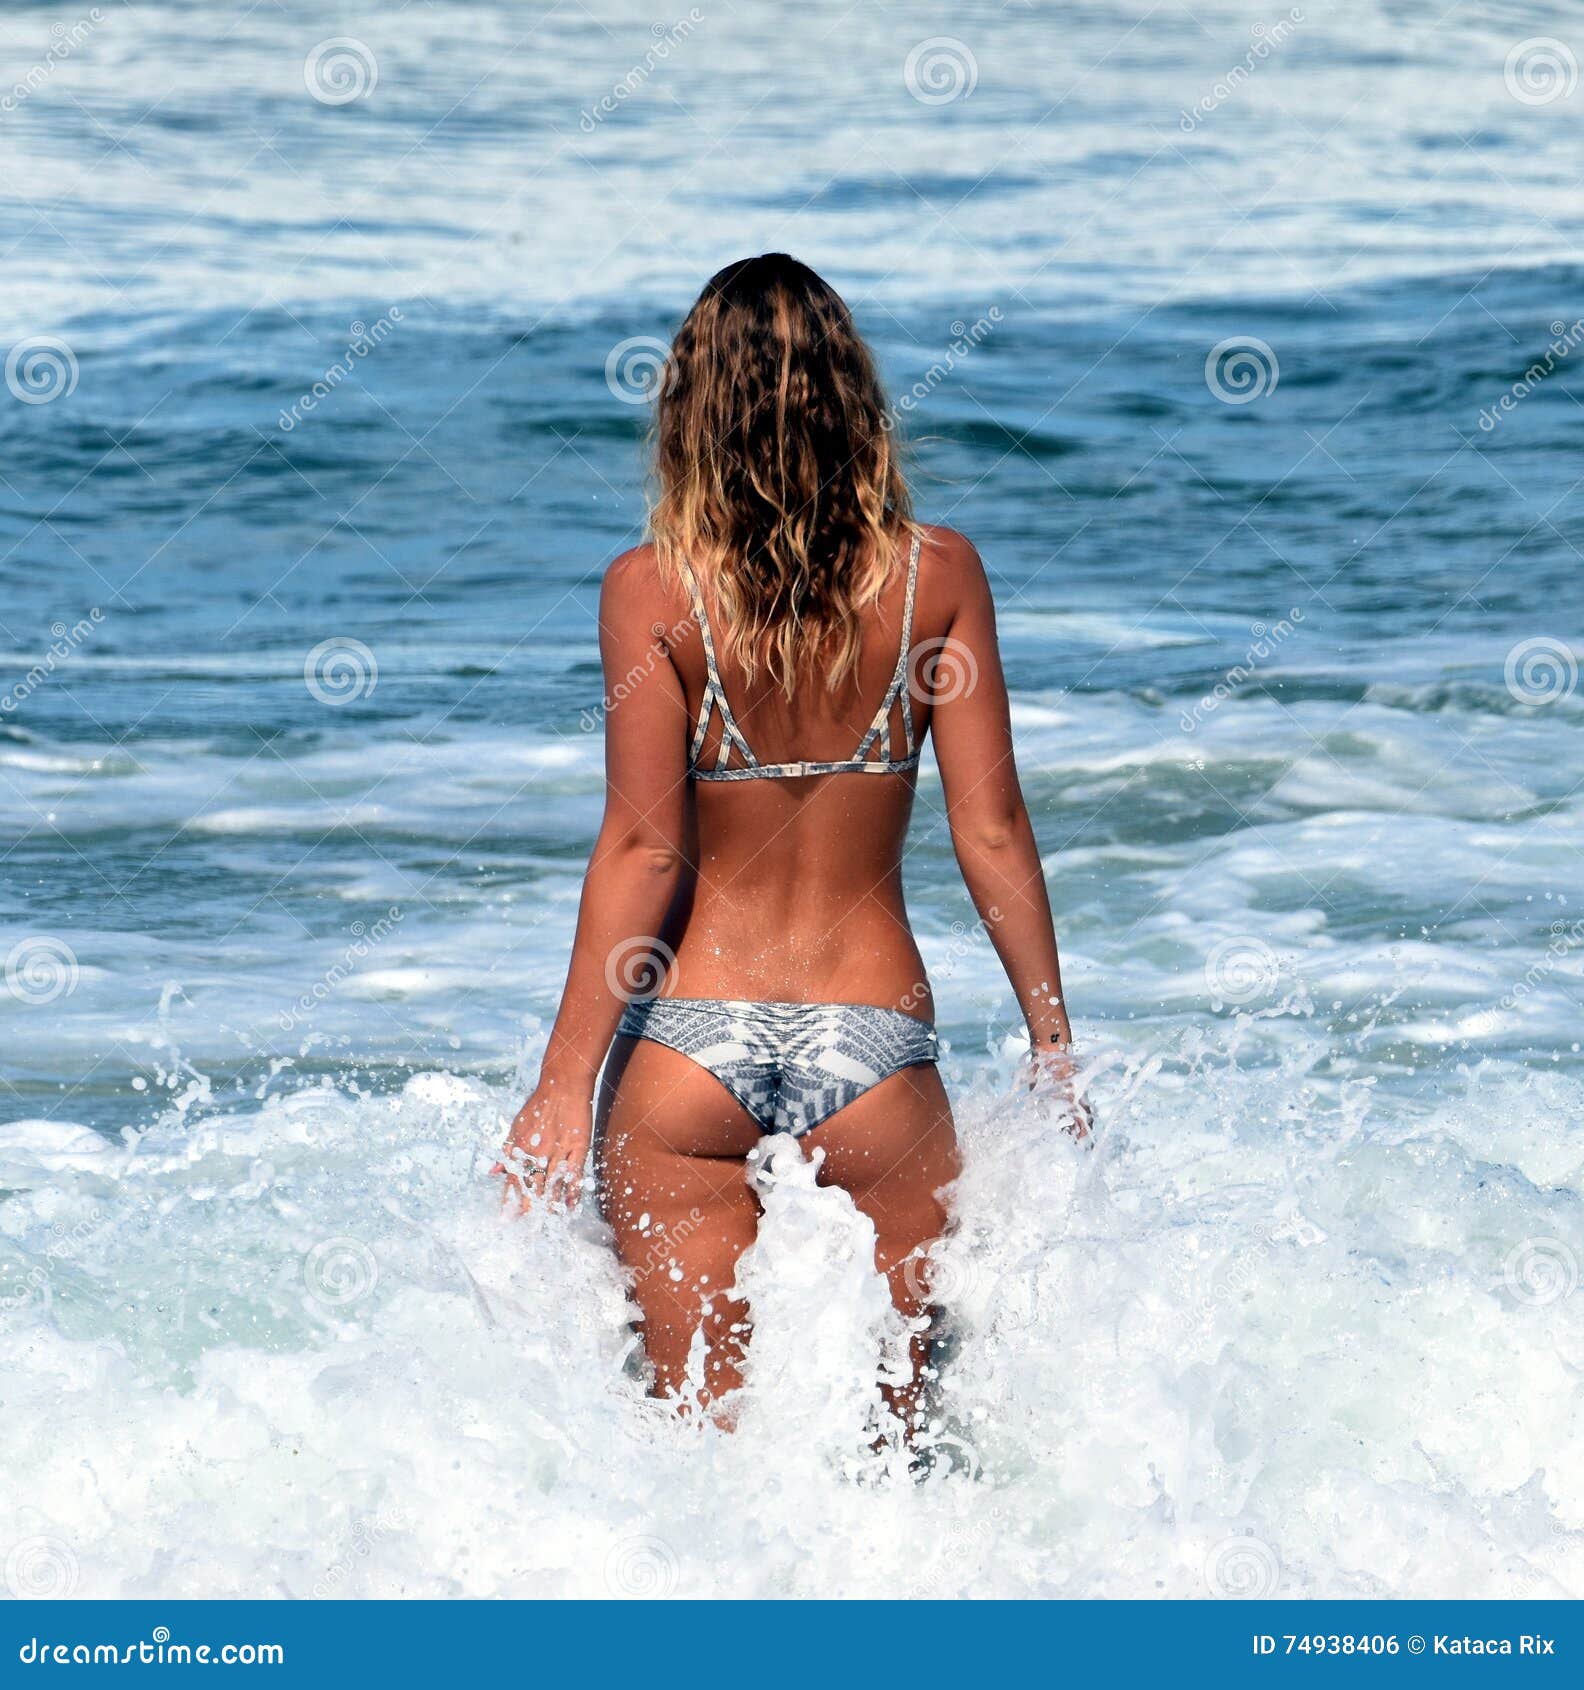 Girl enjoying the waves editorial photo